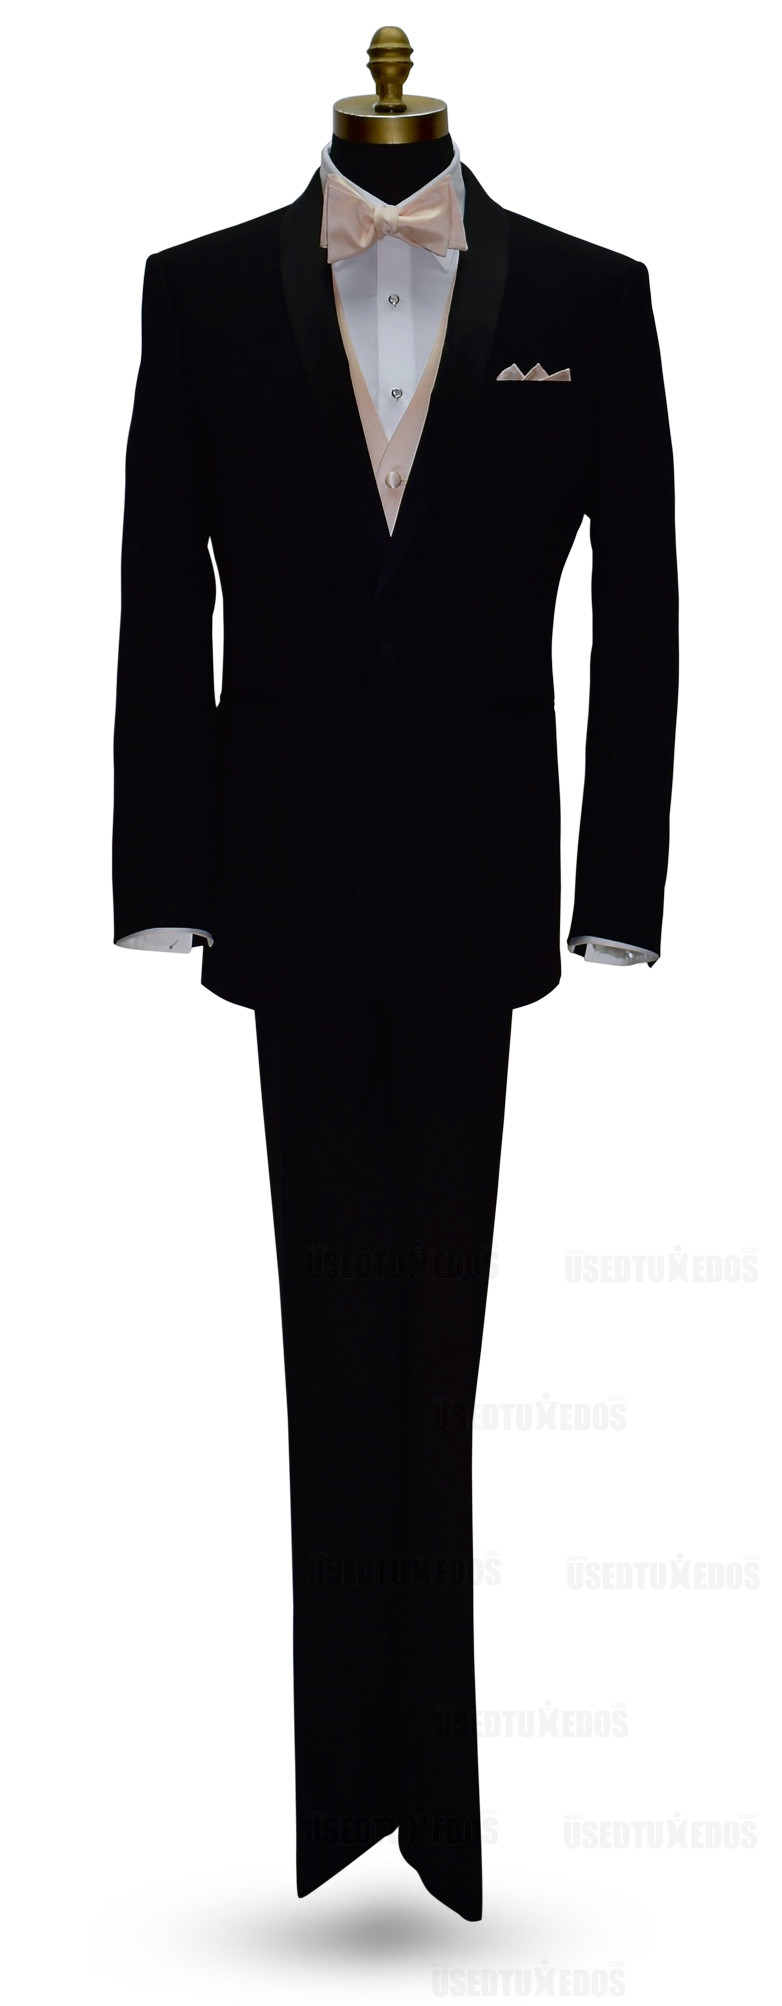 black tuxedo with nude vest and nude self-tie bowtie